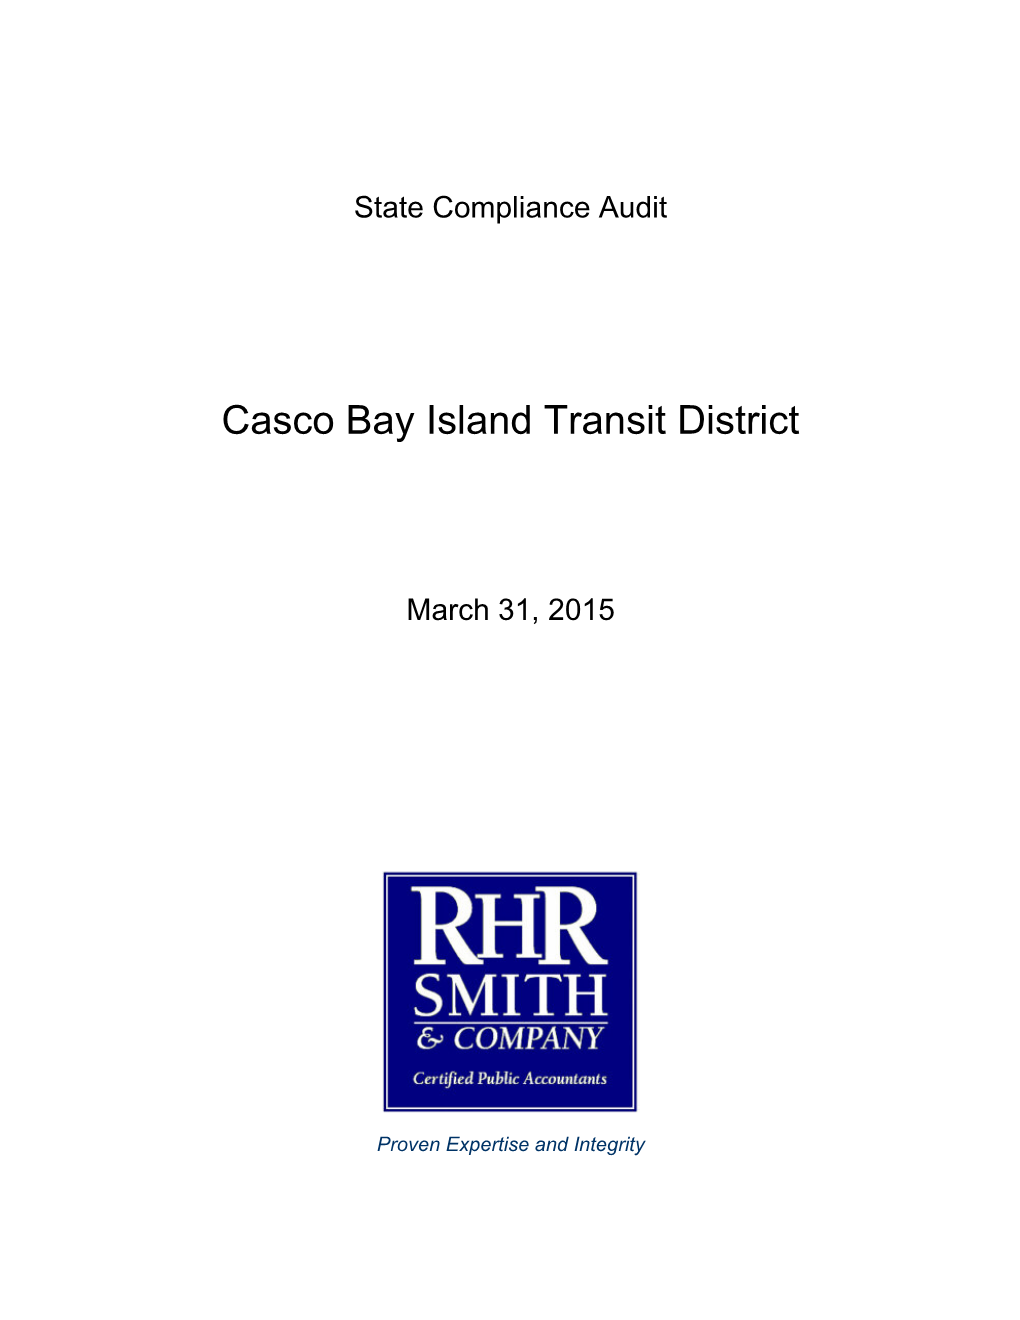 Casco Bay Island Transit District